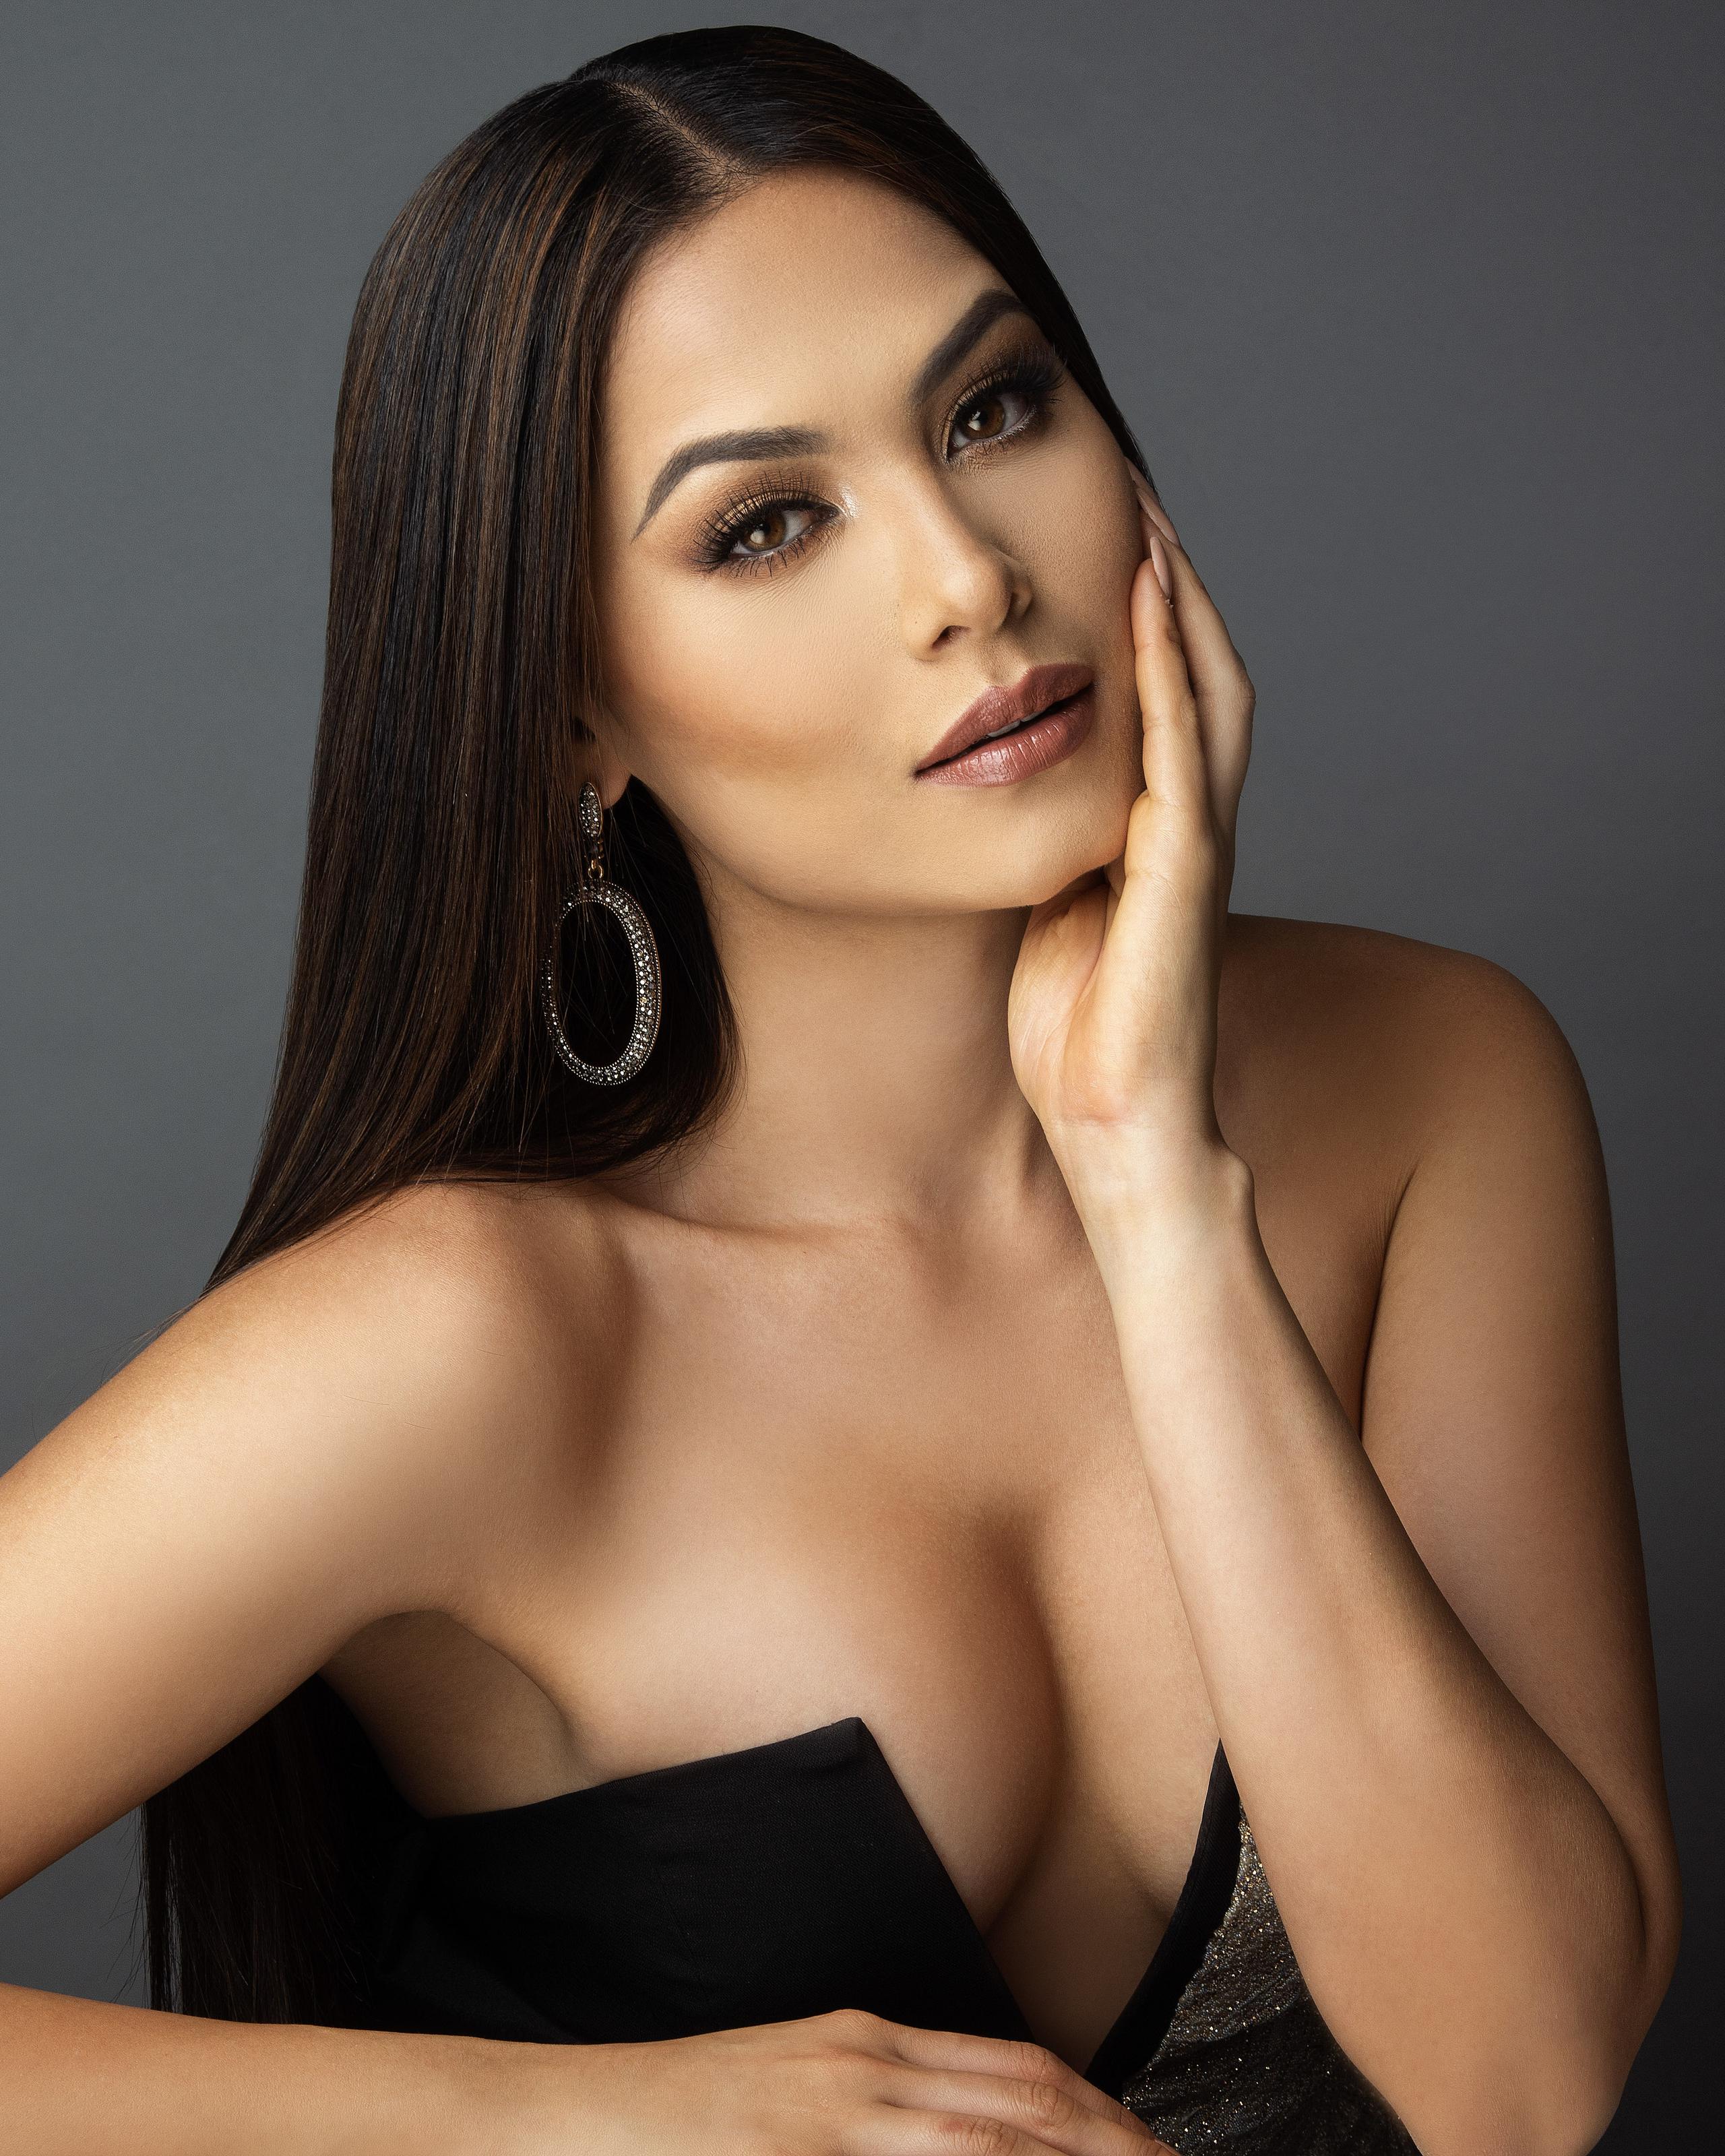 Miss México   
Andrea Meza
26 años